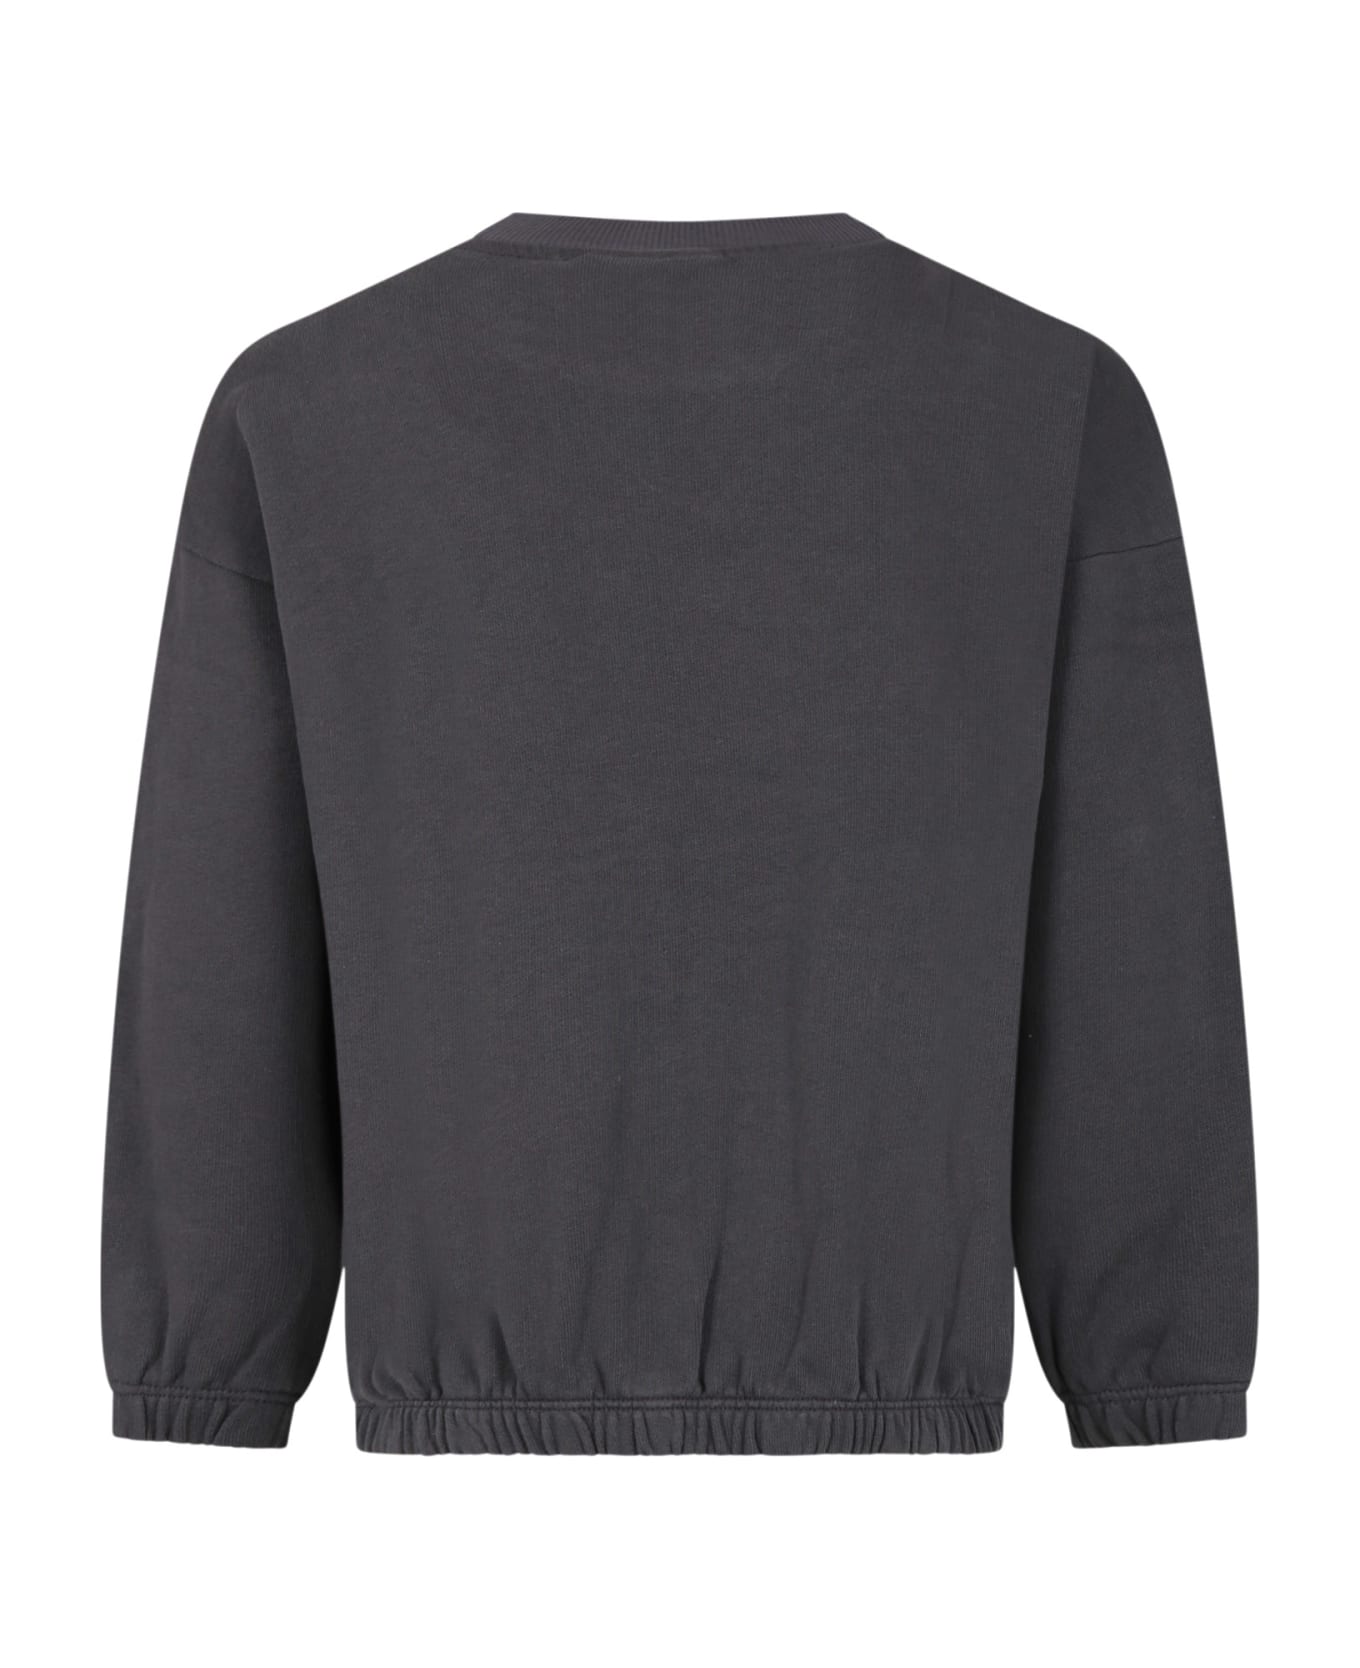 Mini Rodini Gray Sweatshirt For Kids With Jogging Sneakers Print - Grey